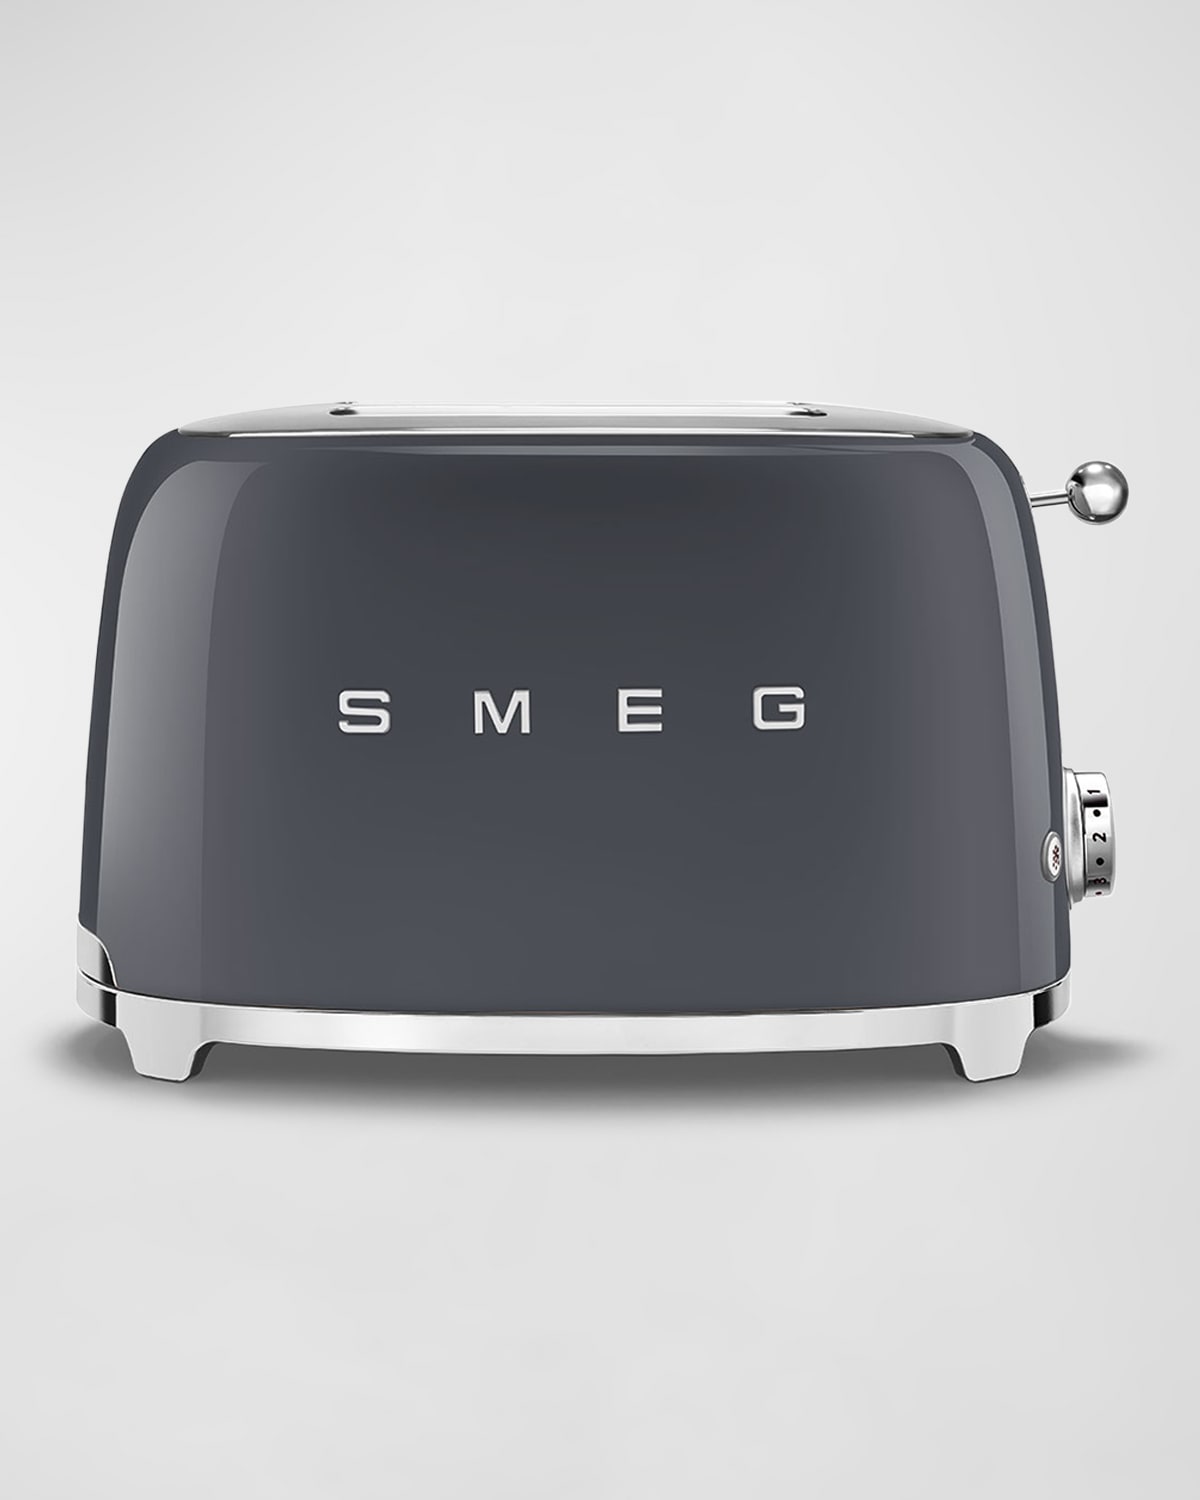 Smeg Retro 2-slice Toaster, White In Slate Gray